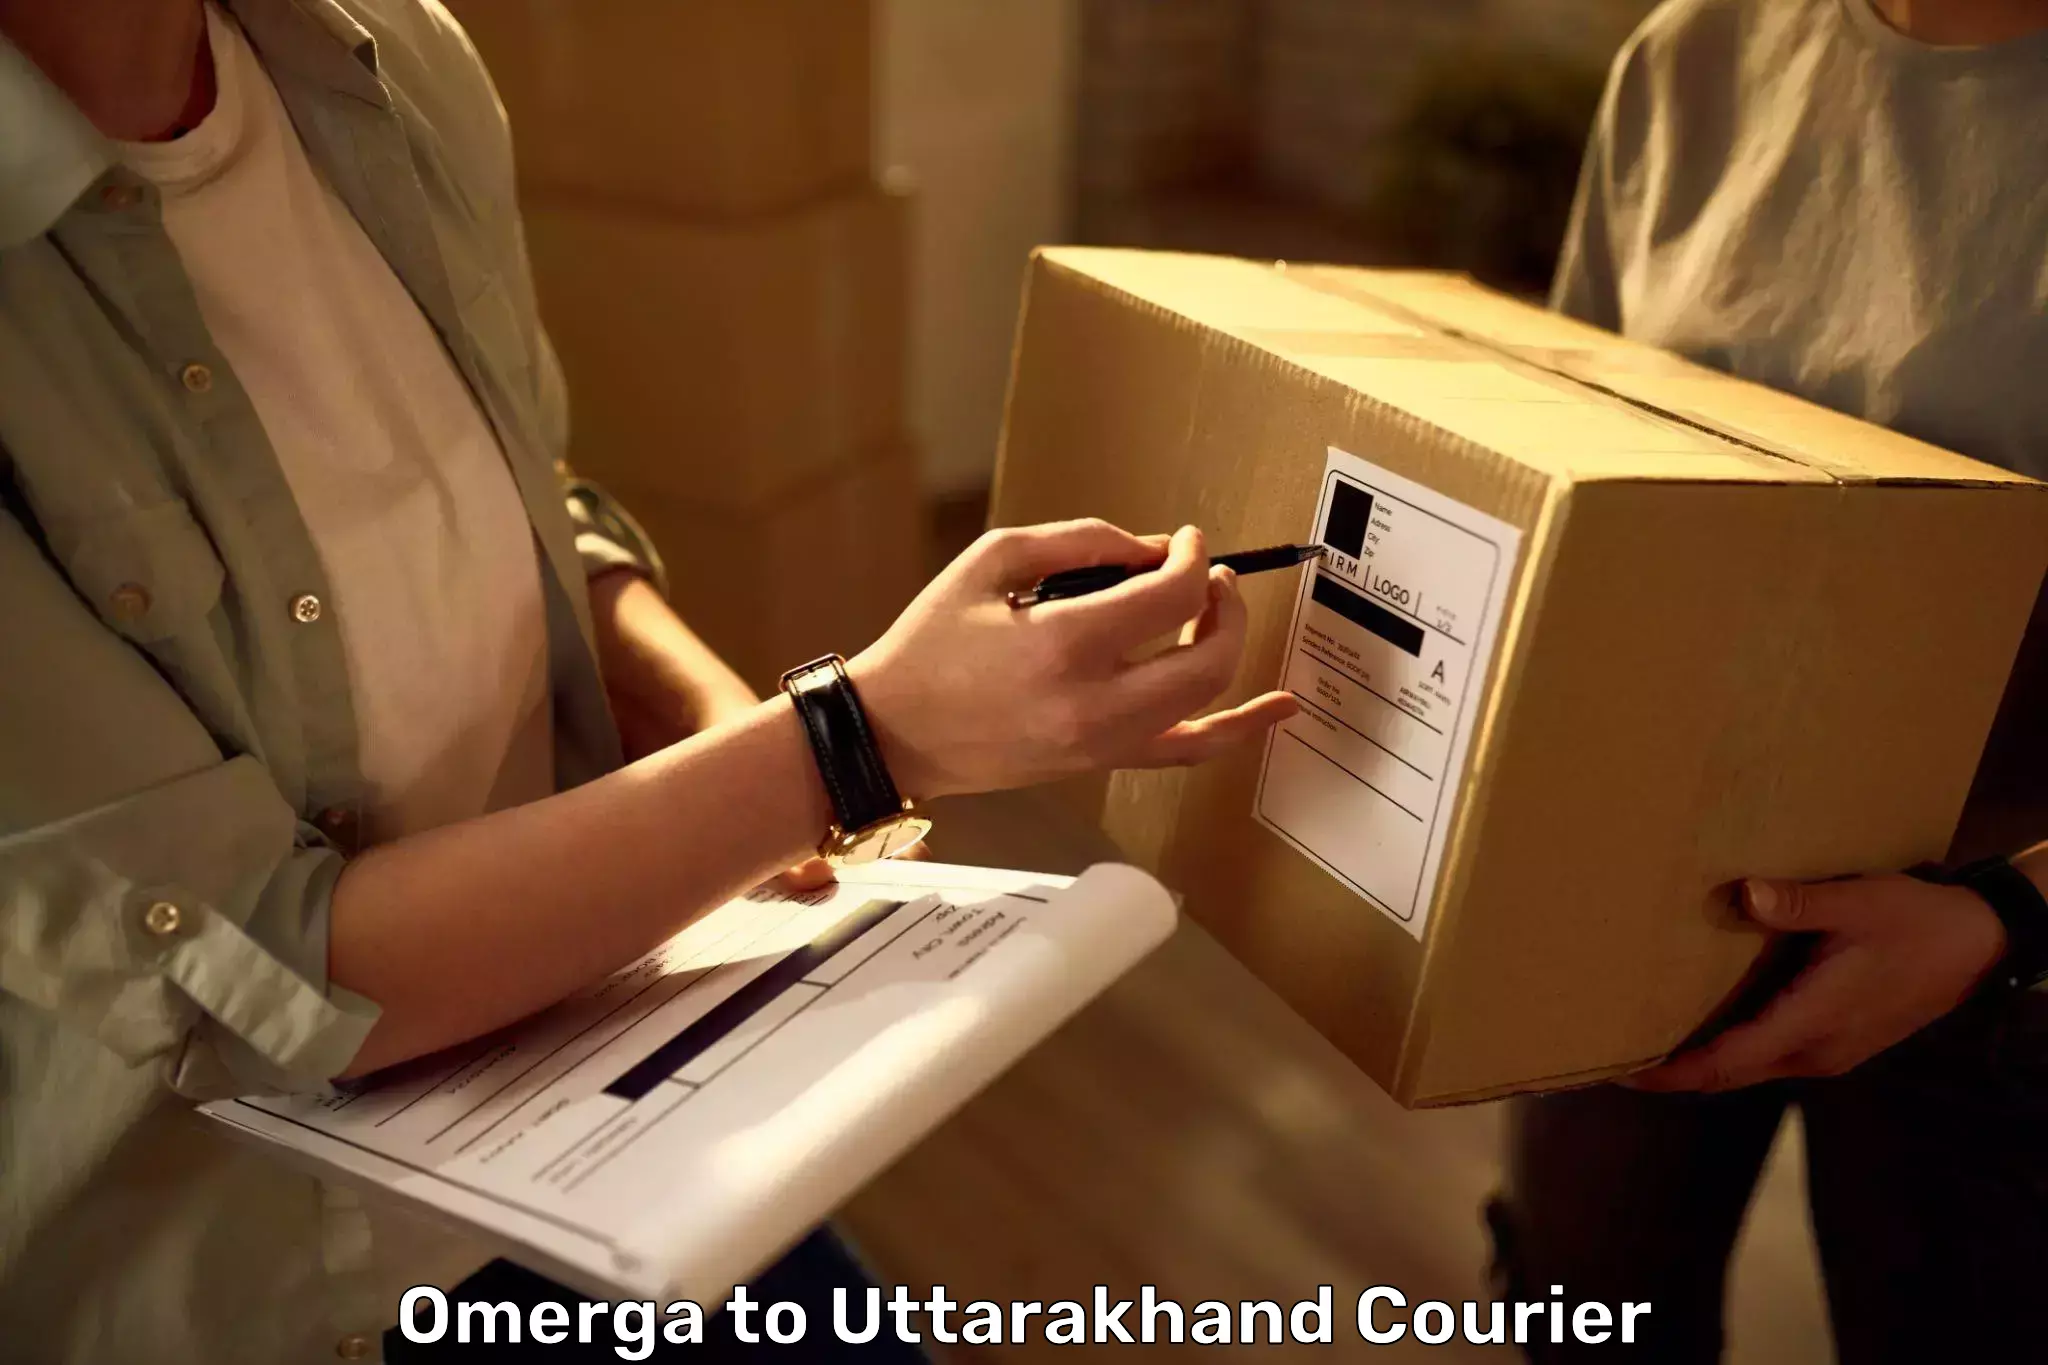 Emergency baggage service Omerga to Uttarakhand